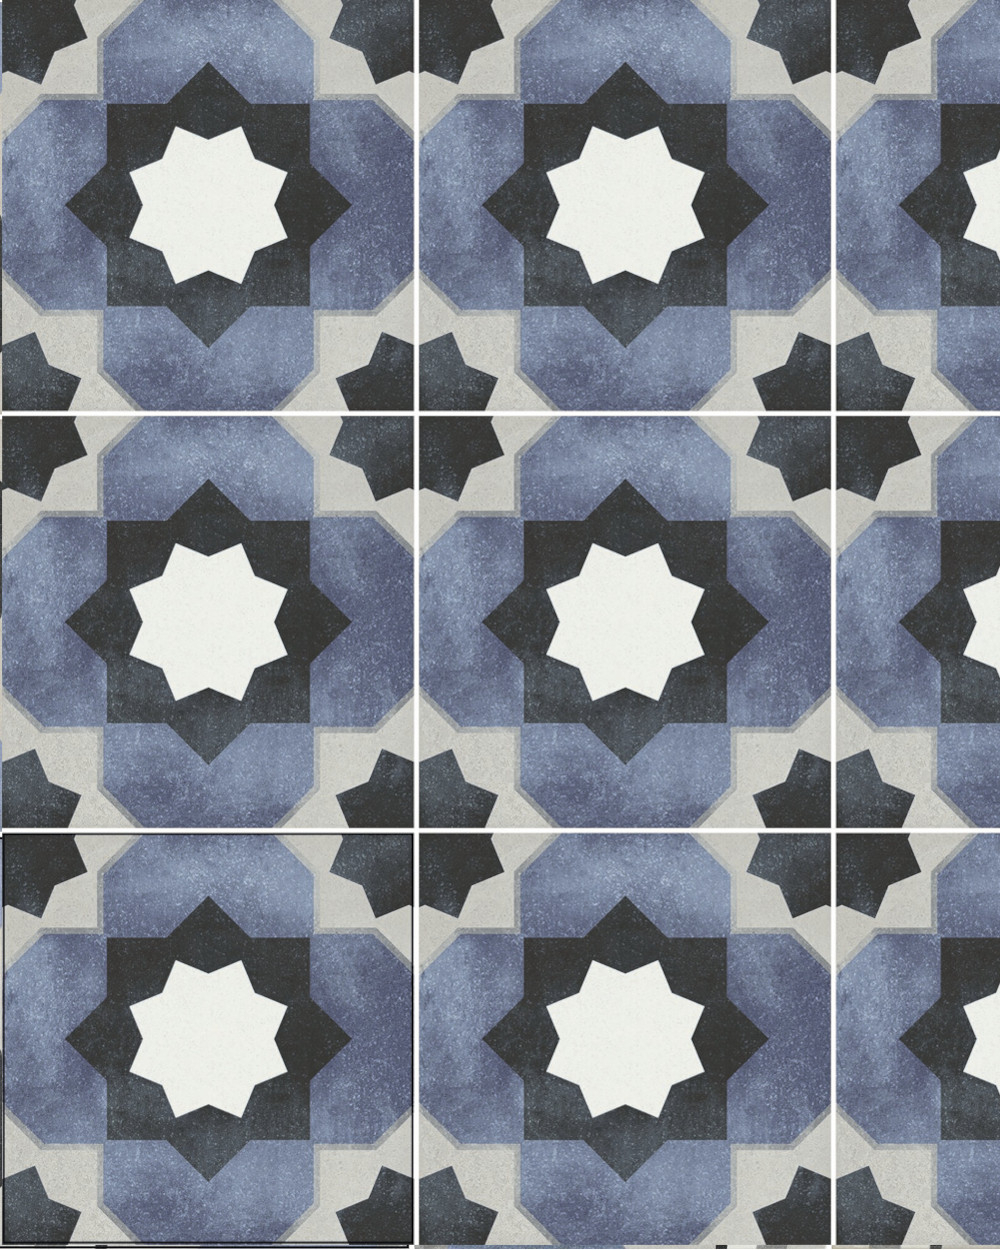 Oriental floor tiles 15x15 cm blue grey with star motif | Sample dispatch